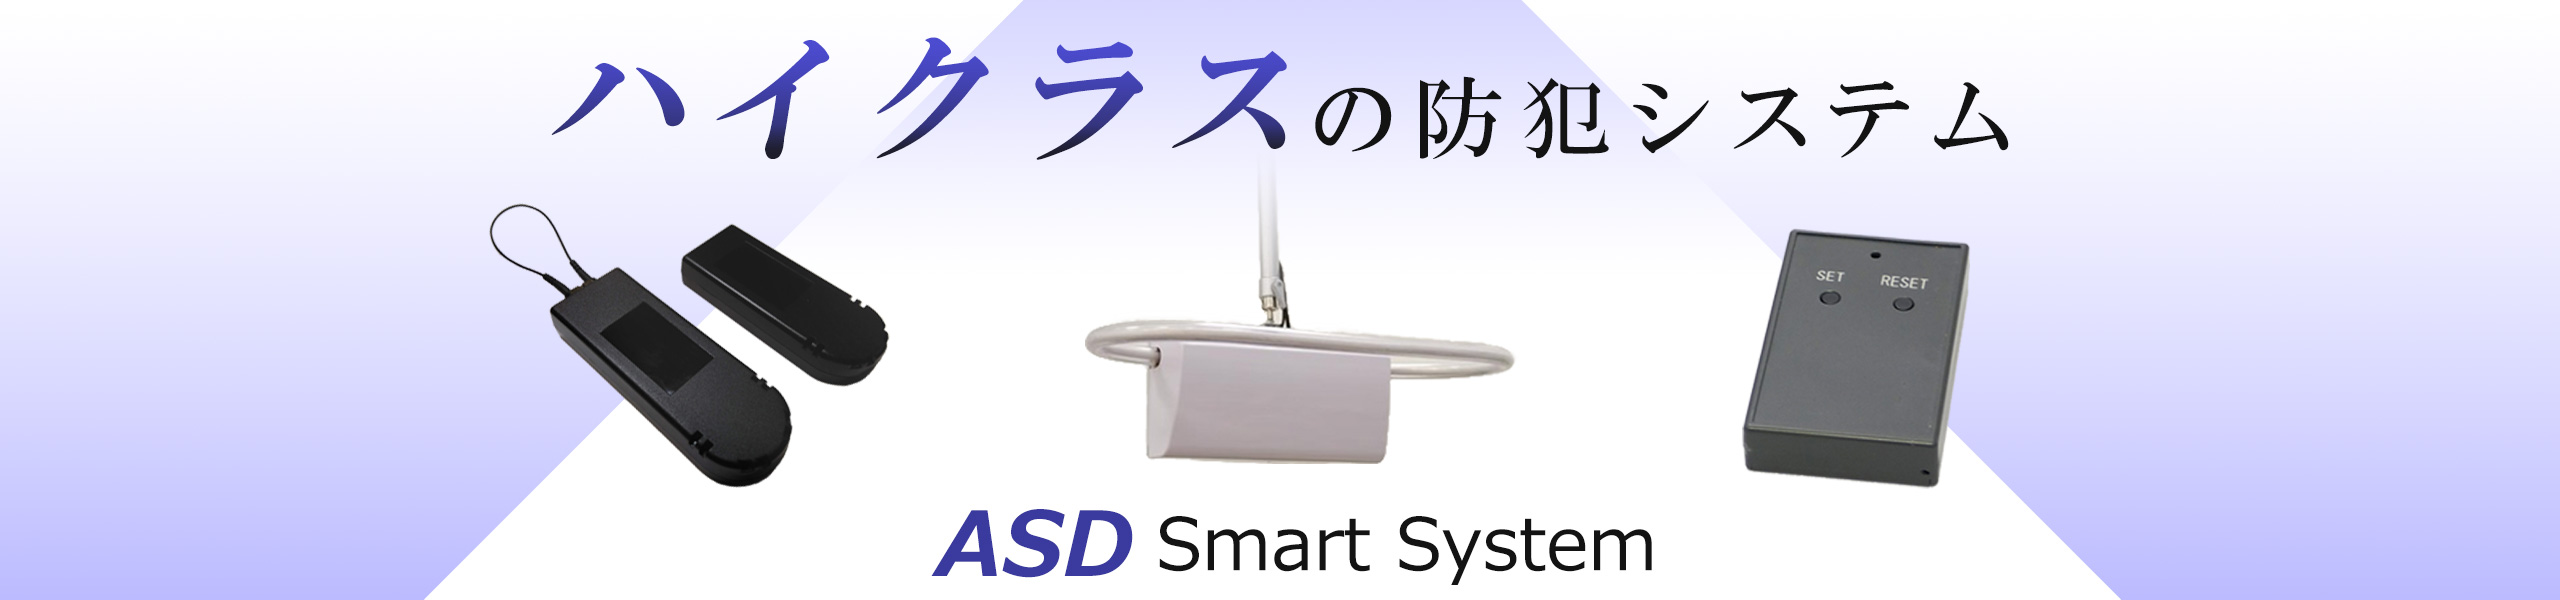 ASD Smart System Main Visual